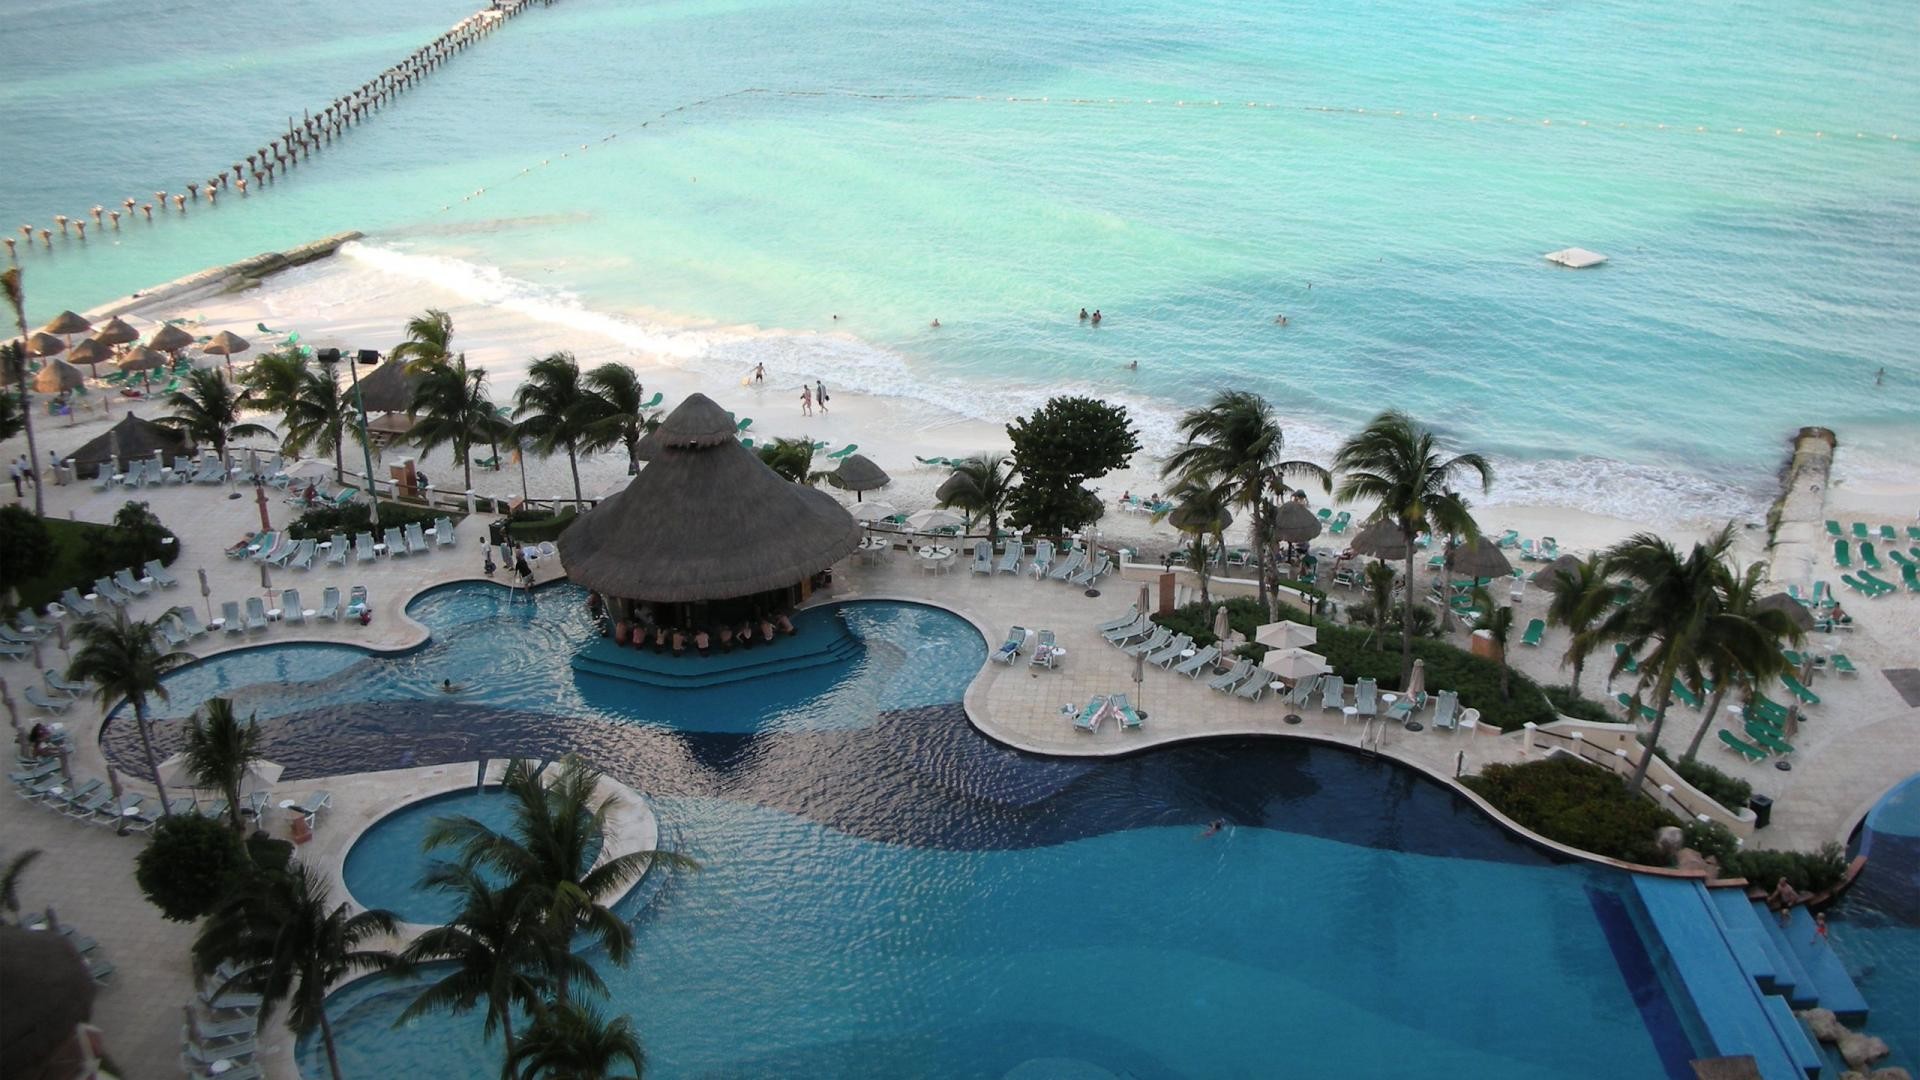 Cancun Mexico Beach Resort Hd Wallpaper Hd Pic 
 Data - Miami Florida Beach Resort - HD Wallpaper 